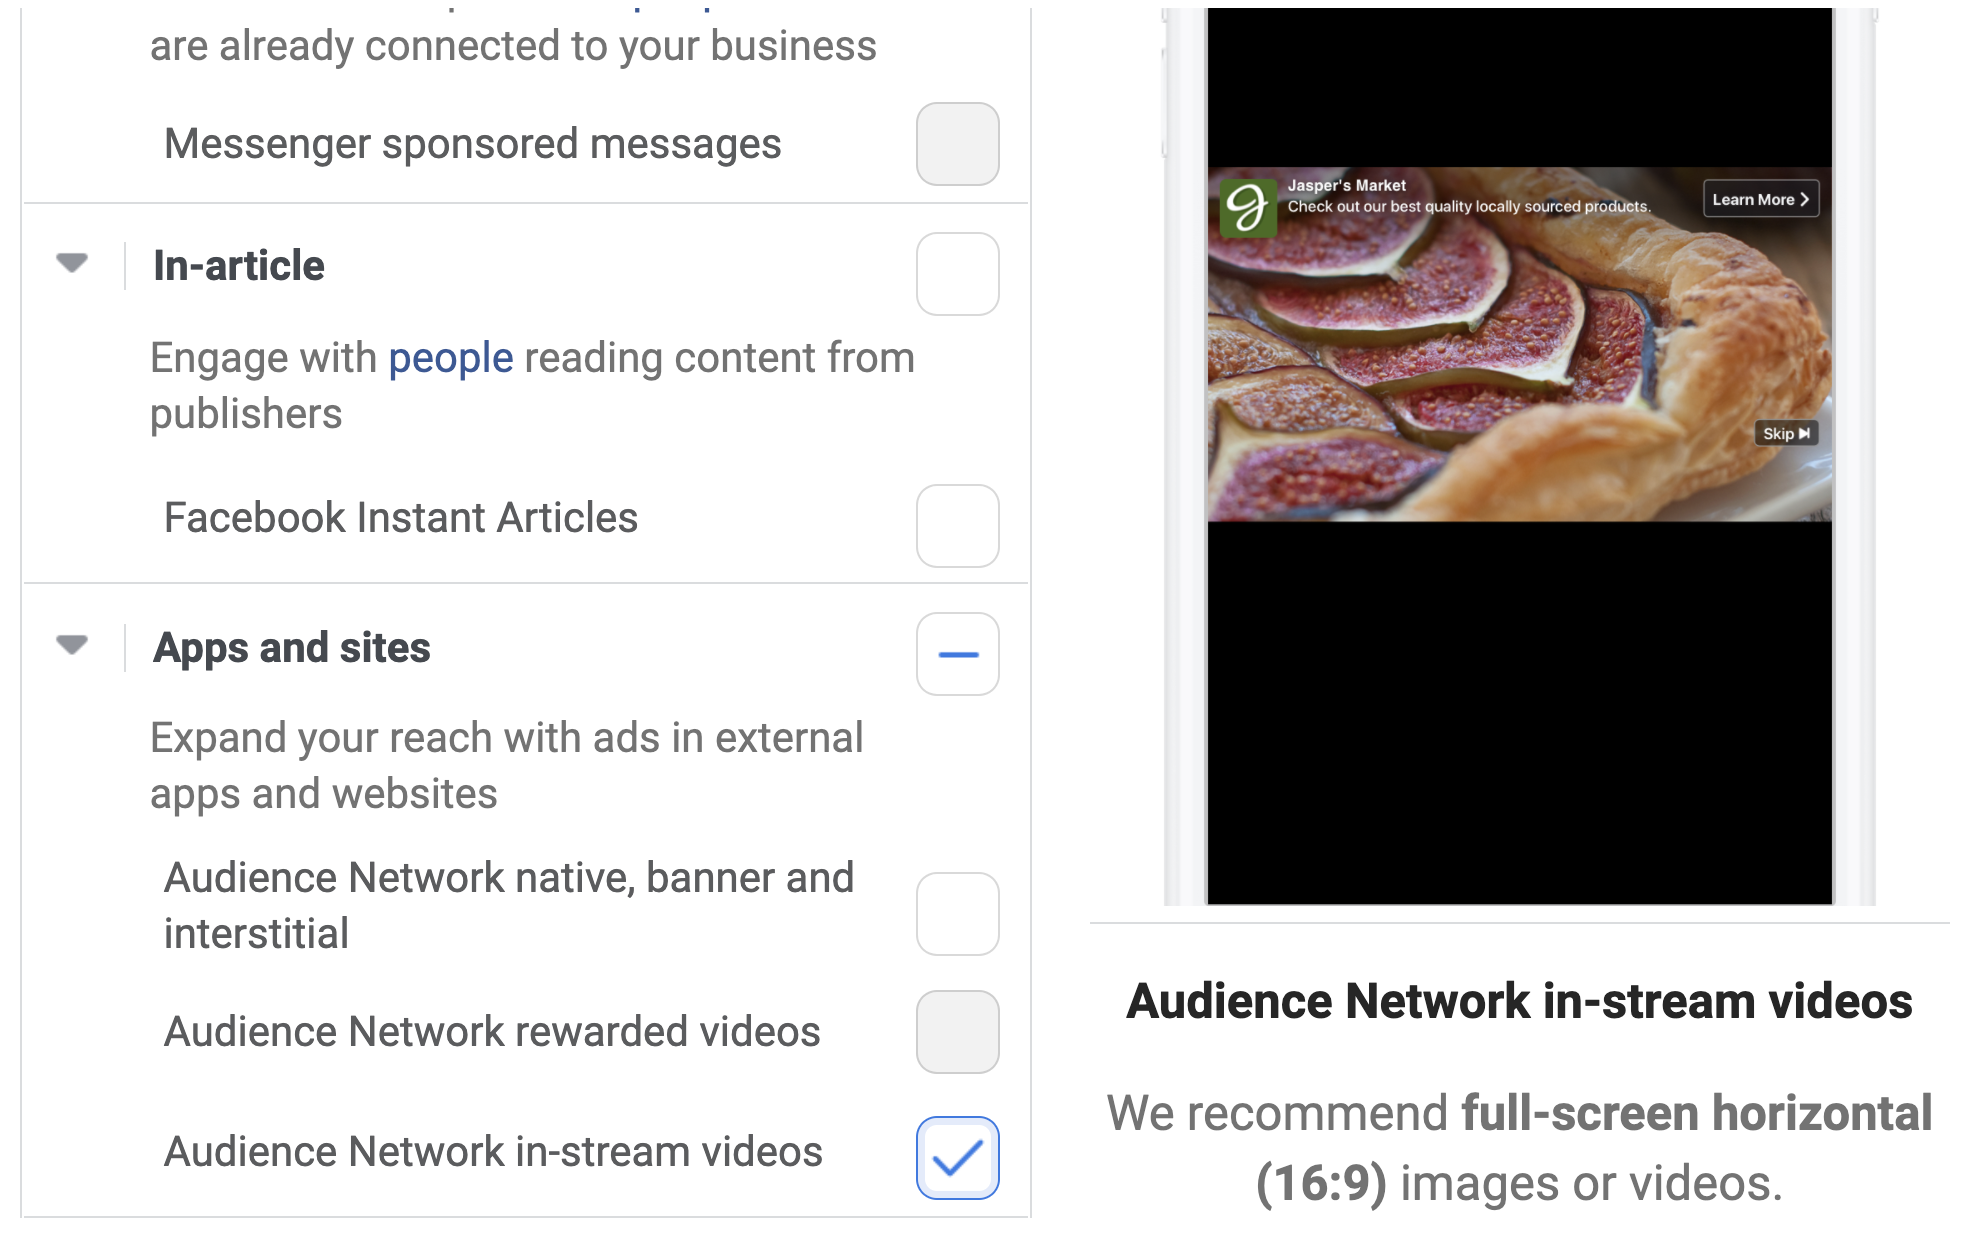 Audience Network In-Stream videos